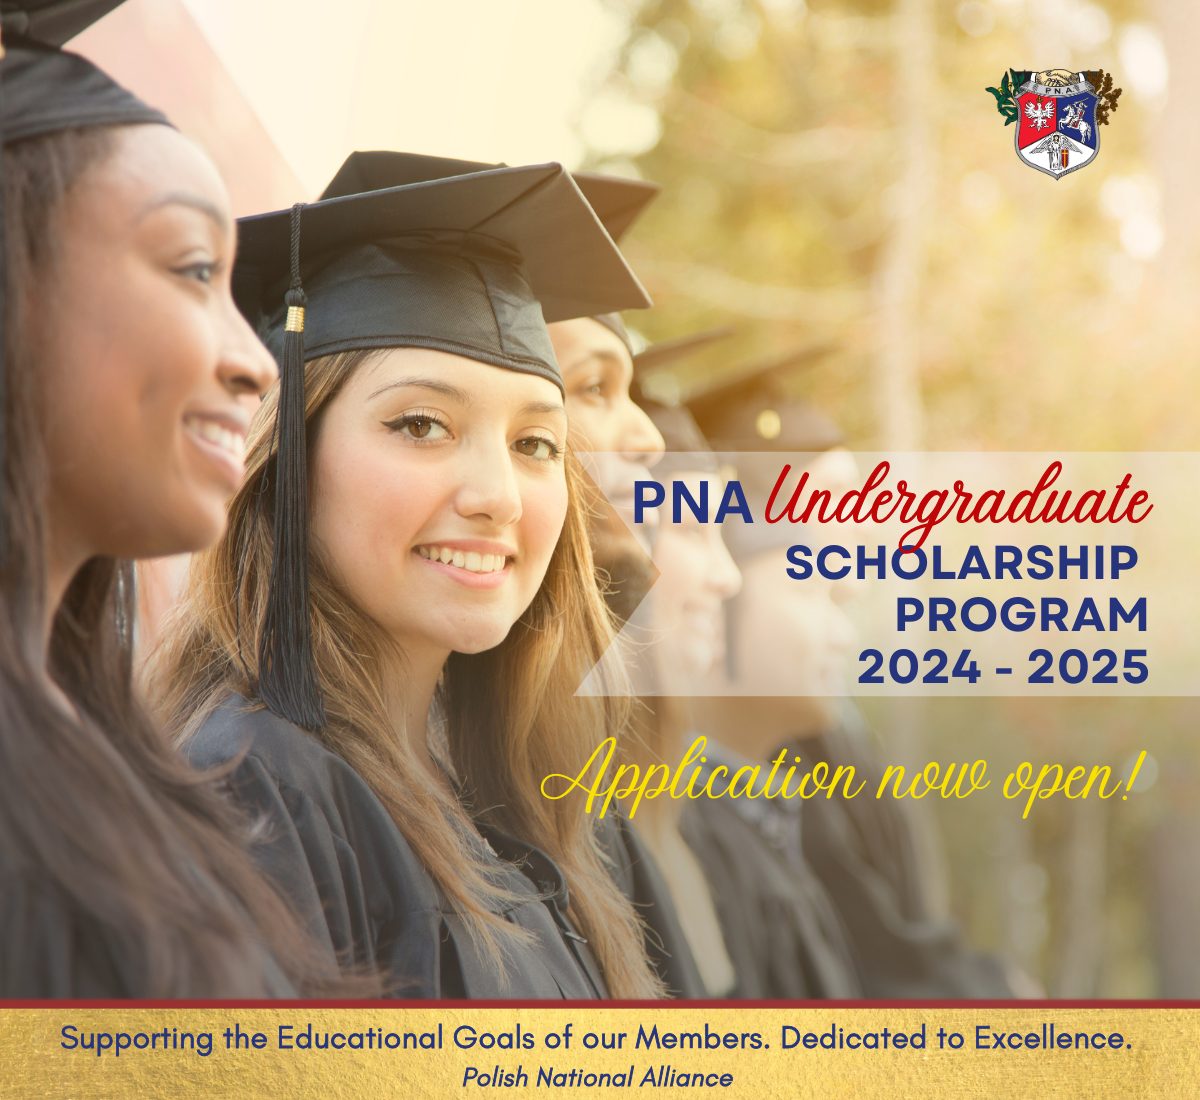 Application process for the PNA Undergraduate Scholarship Program 2024 - 2025. Application deadline postmarked no later than April 15, 2024.